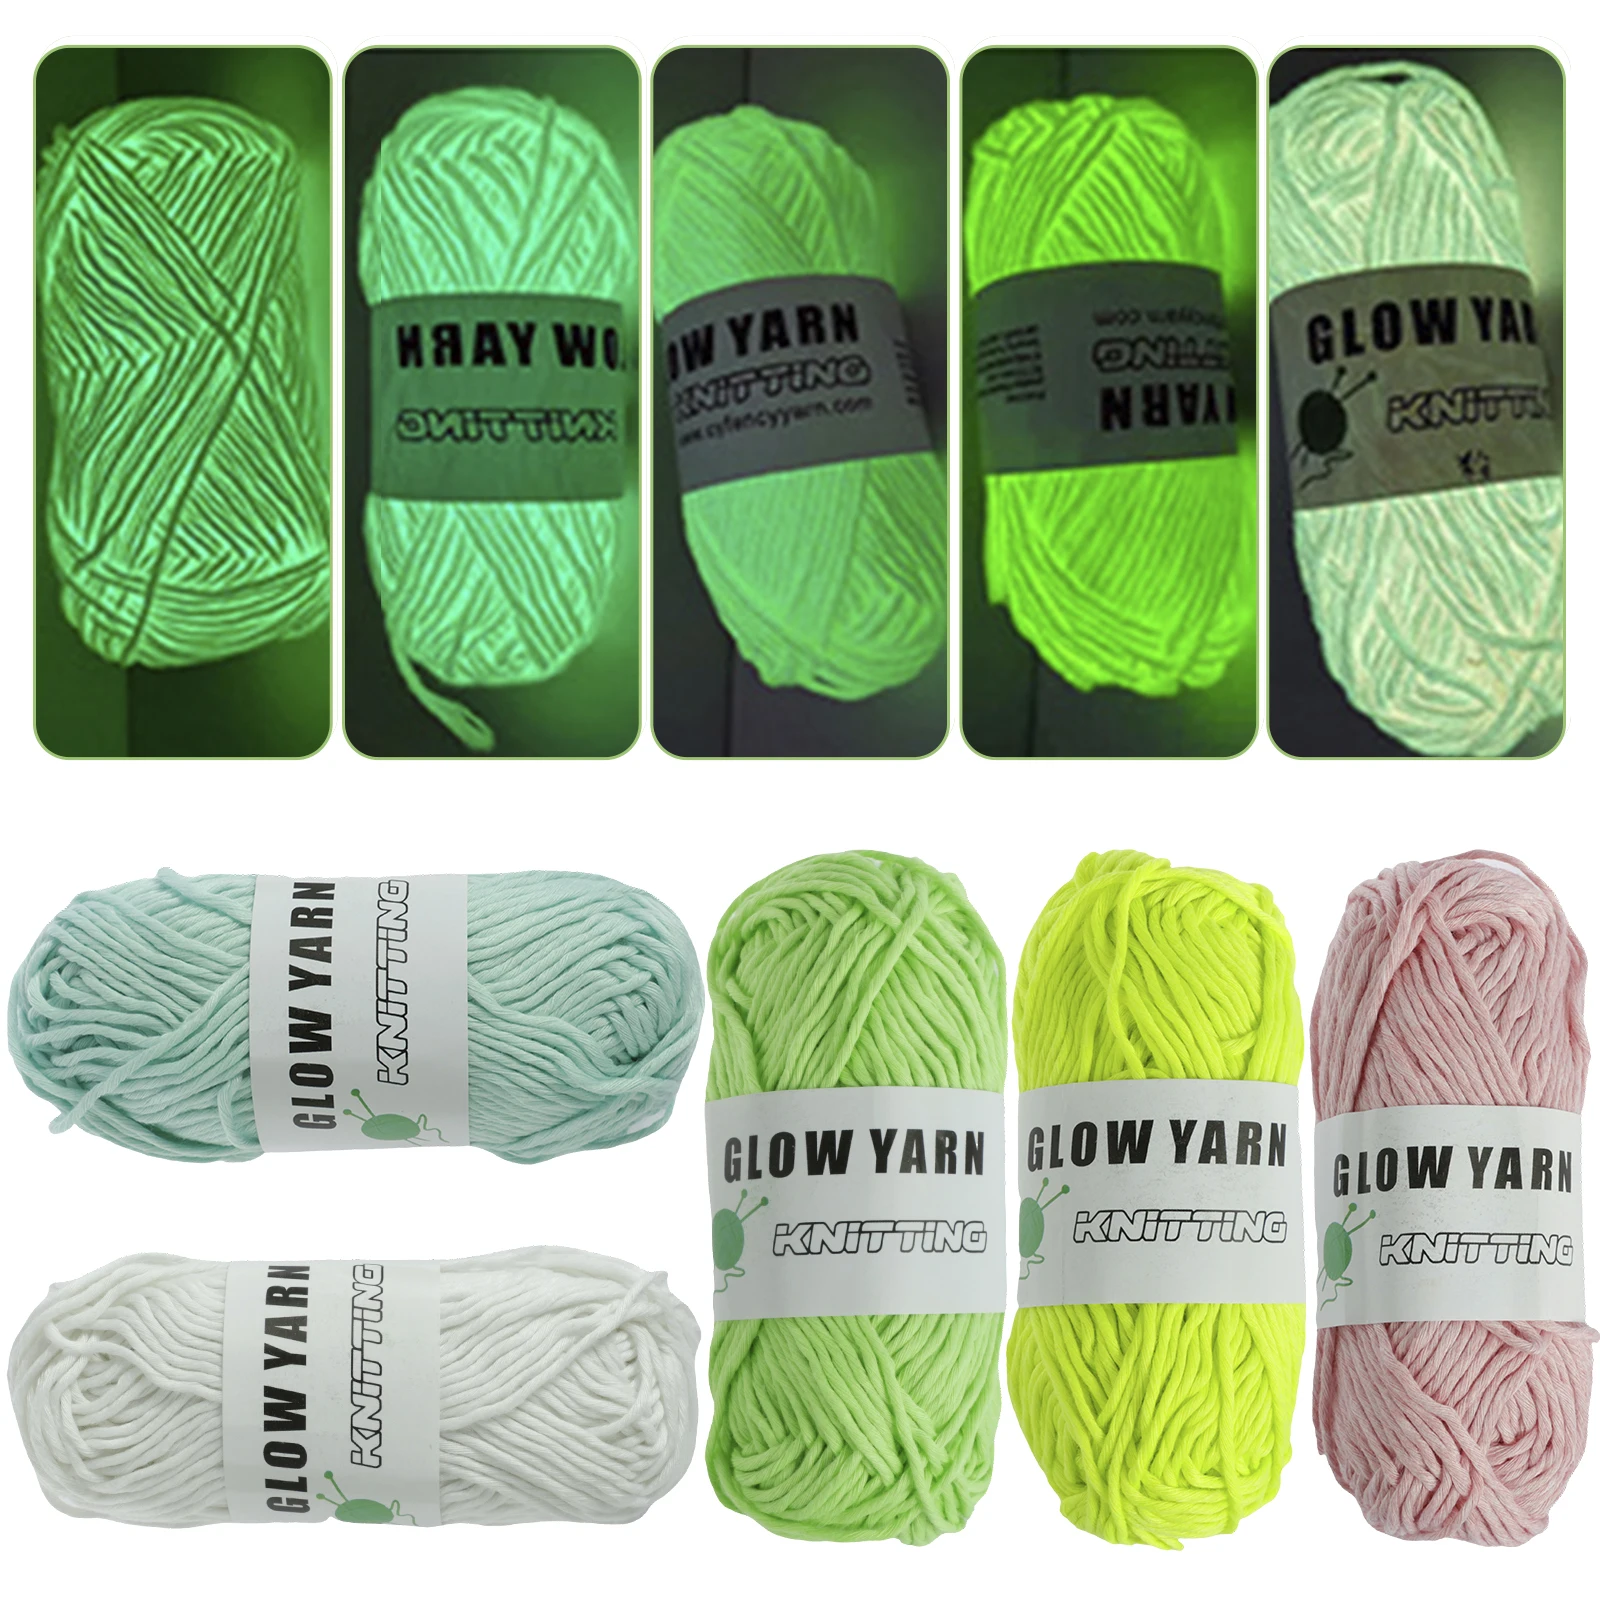 

5 Rolls Glow in The Dark Yarn 58 Yard Luminous Yarn for Crocheting Soft Glow Crochet Yarn 5 Colors Glow Yarn Knitting Creative